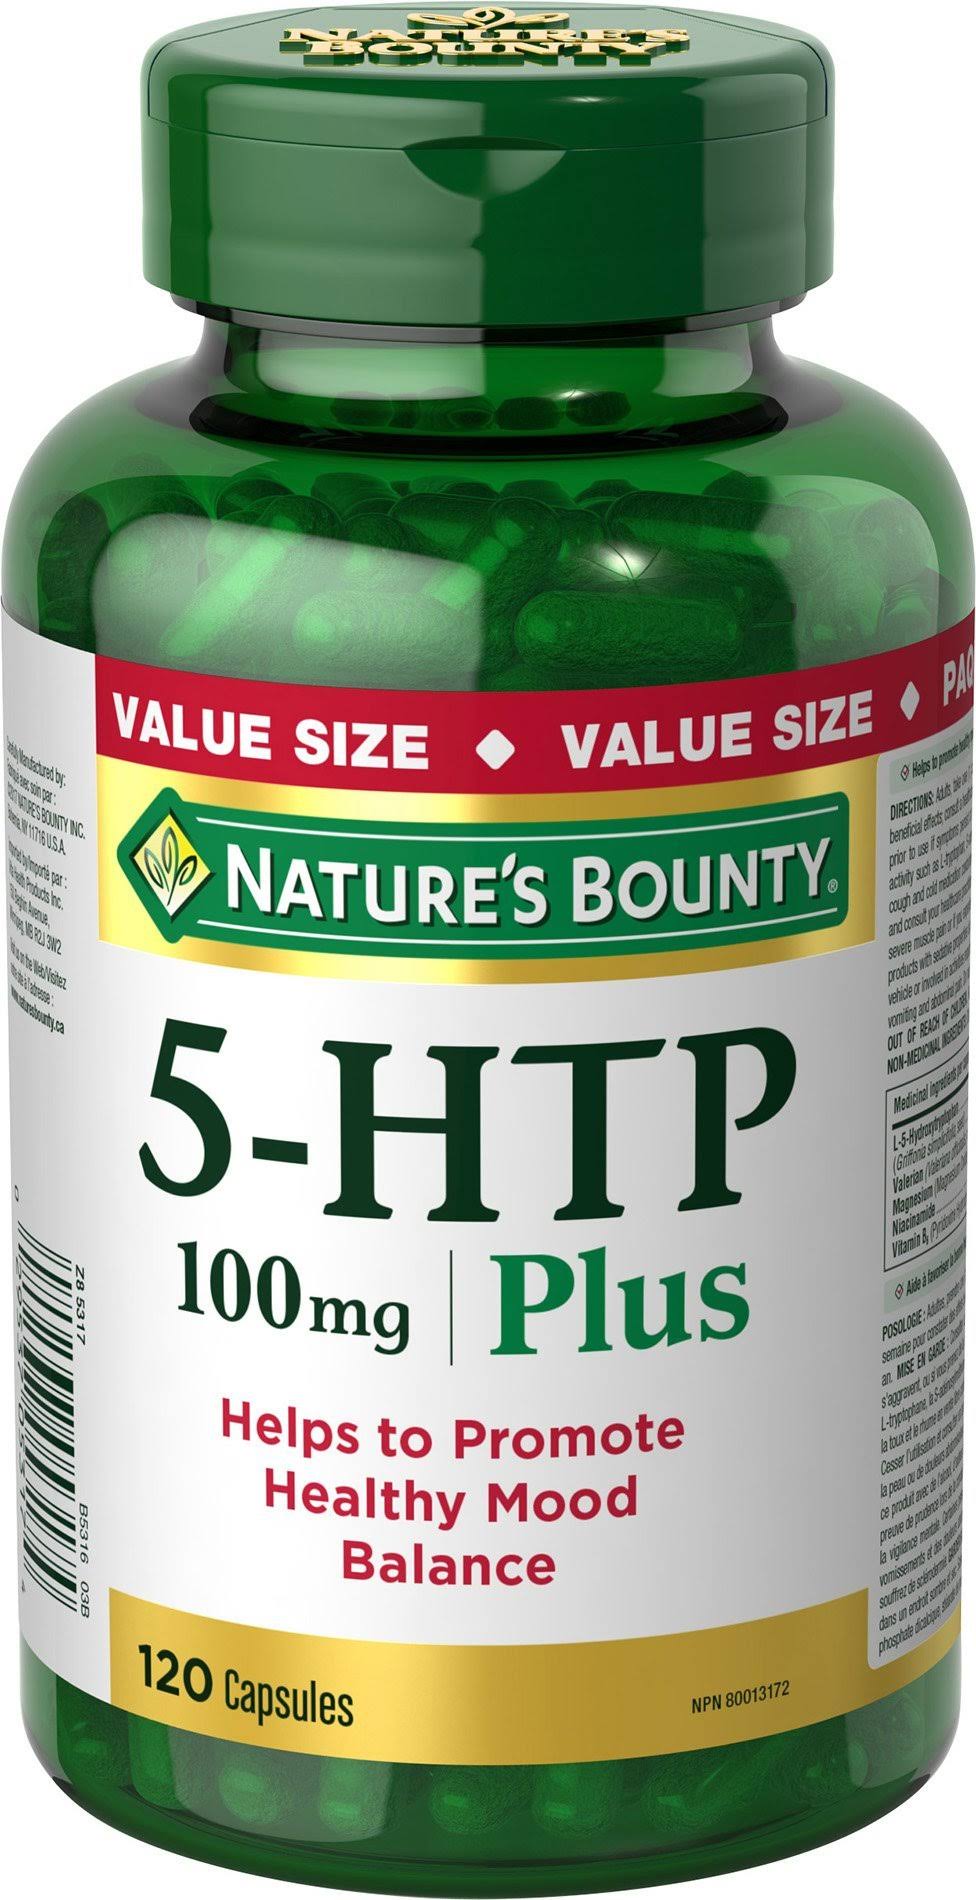 Nature's Bounty 5-HTP Plus Supplement - 100mg, 120 Capsules